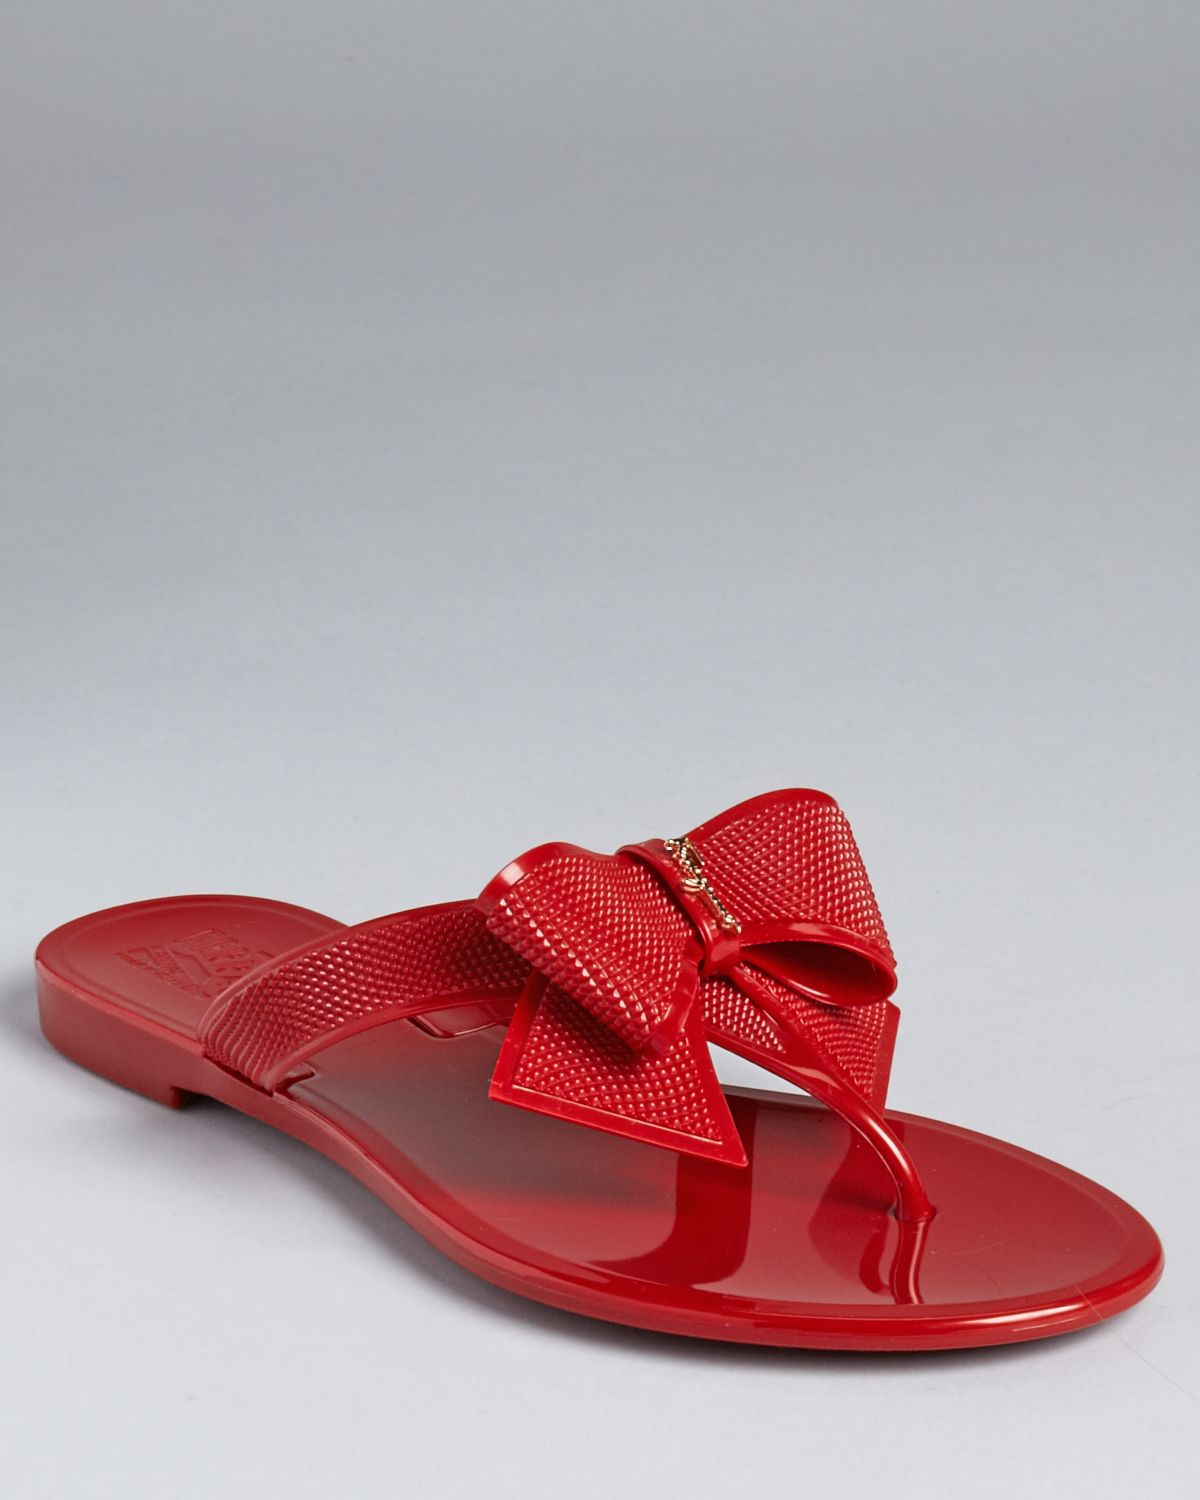 Ferragamo Sandals Bali Jelly Flip Flop in Red - Lyst